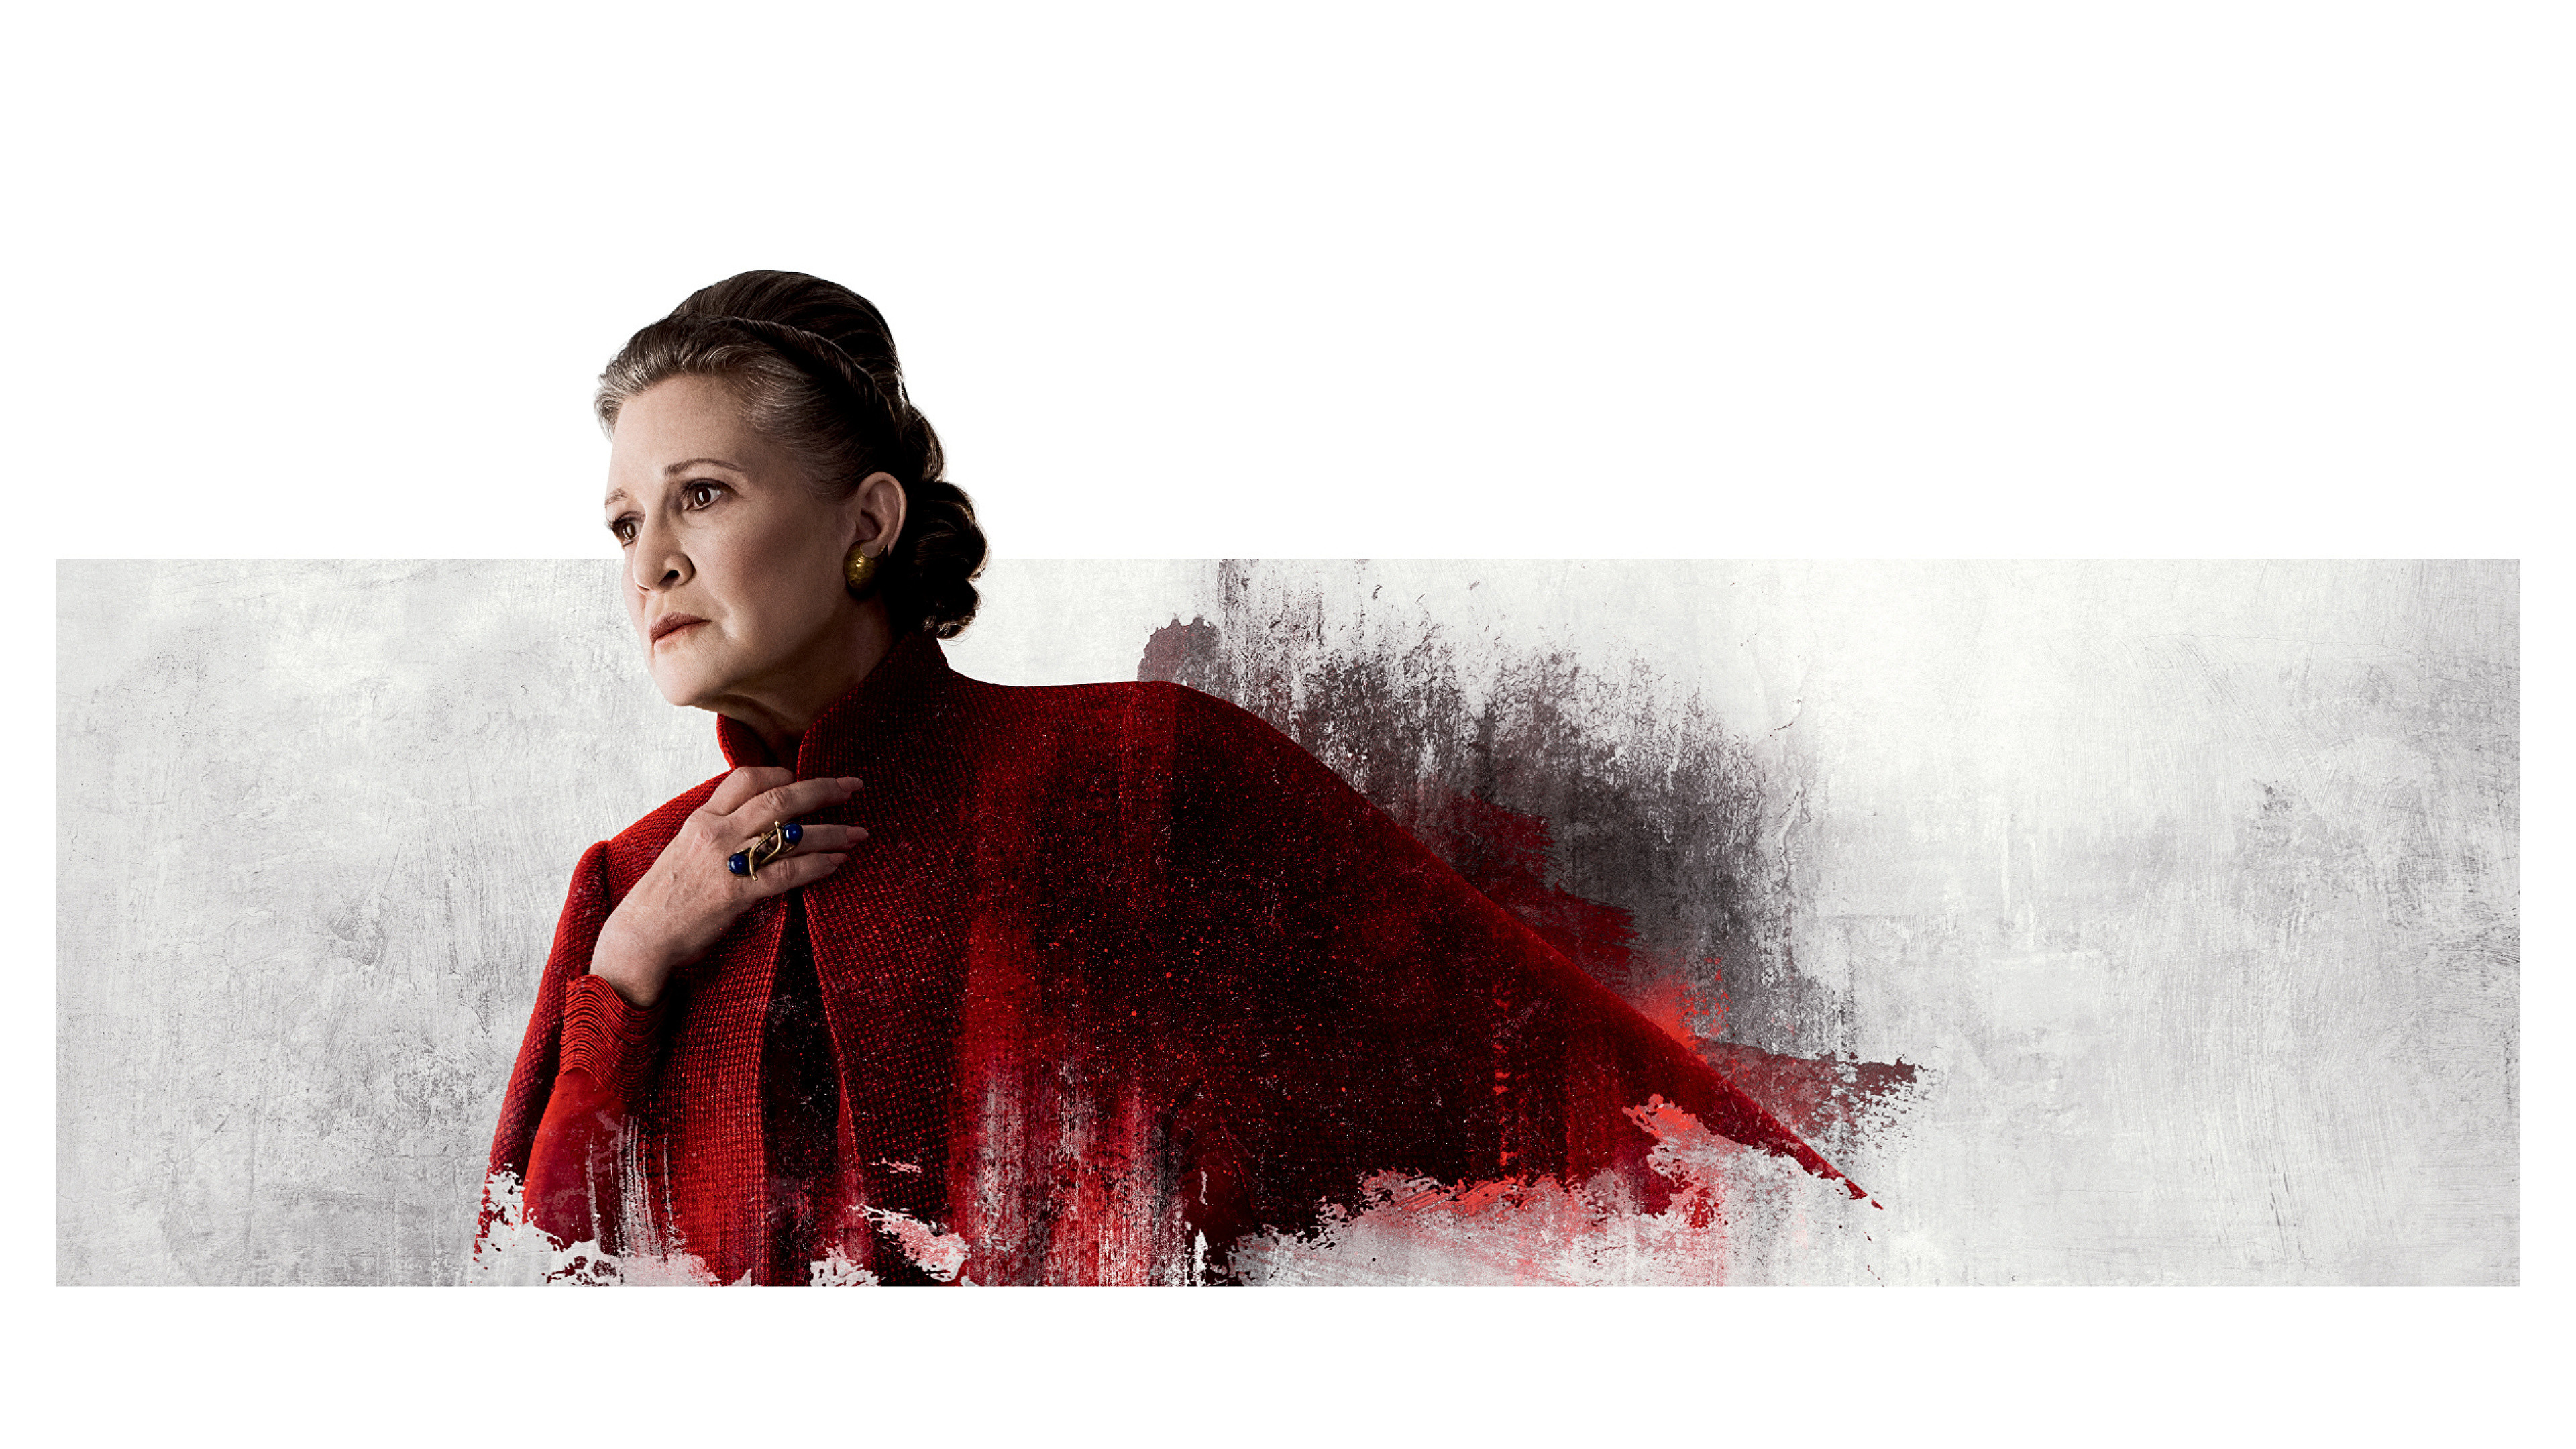 Wallpaper Star Wars The Last Jedi Leia Carrie Fisher Movies 3840x2160 3840x2160